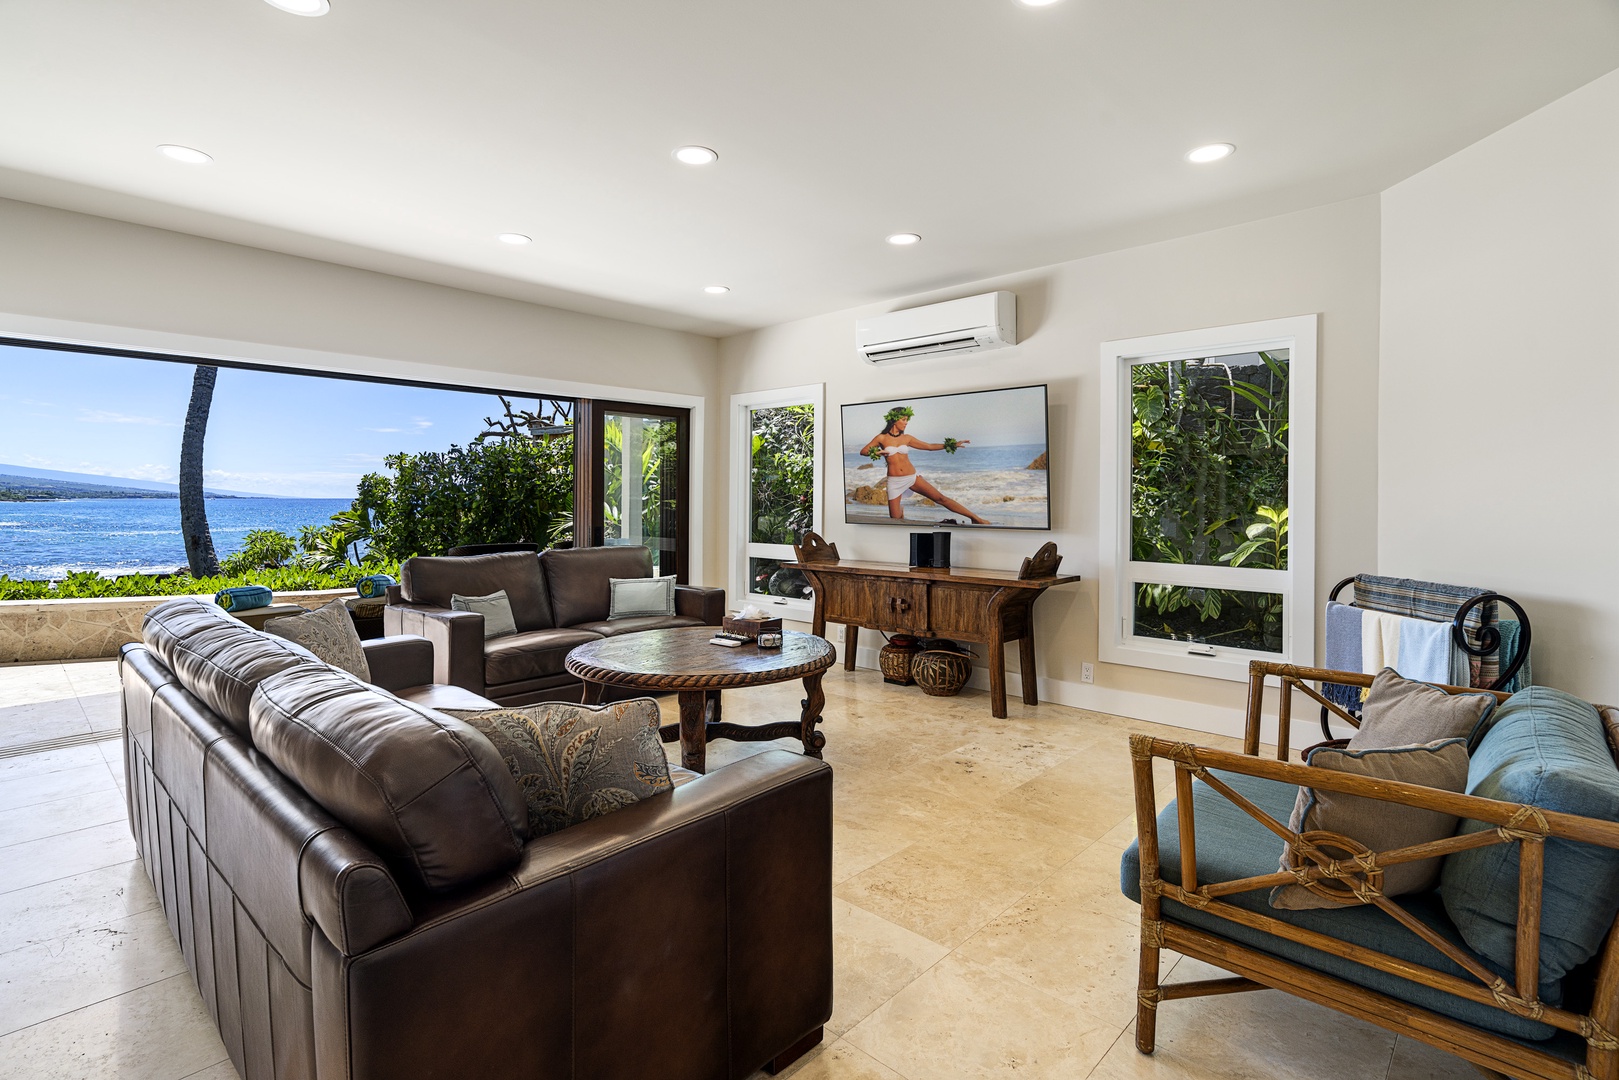 Kailua Kona Vacation Rentals, Ali'i Point #7 - Amazing Ocean View living room